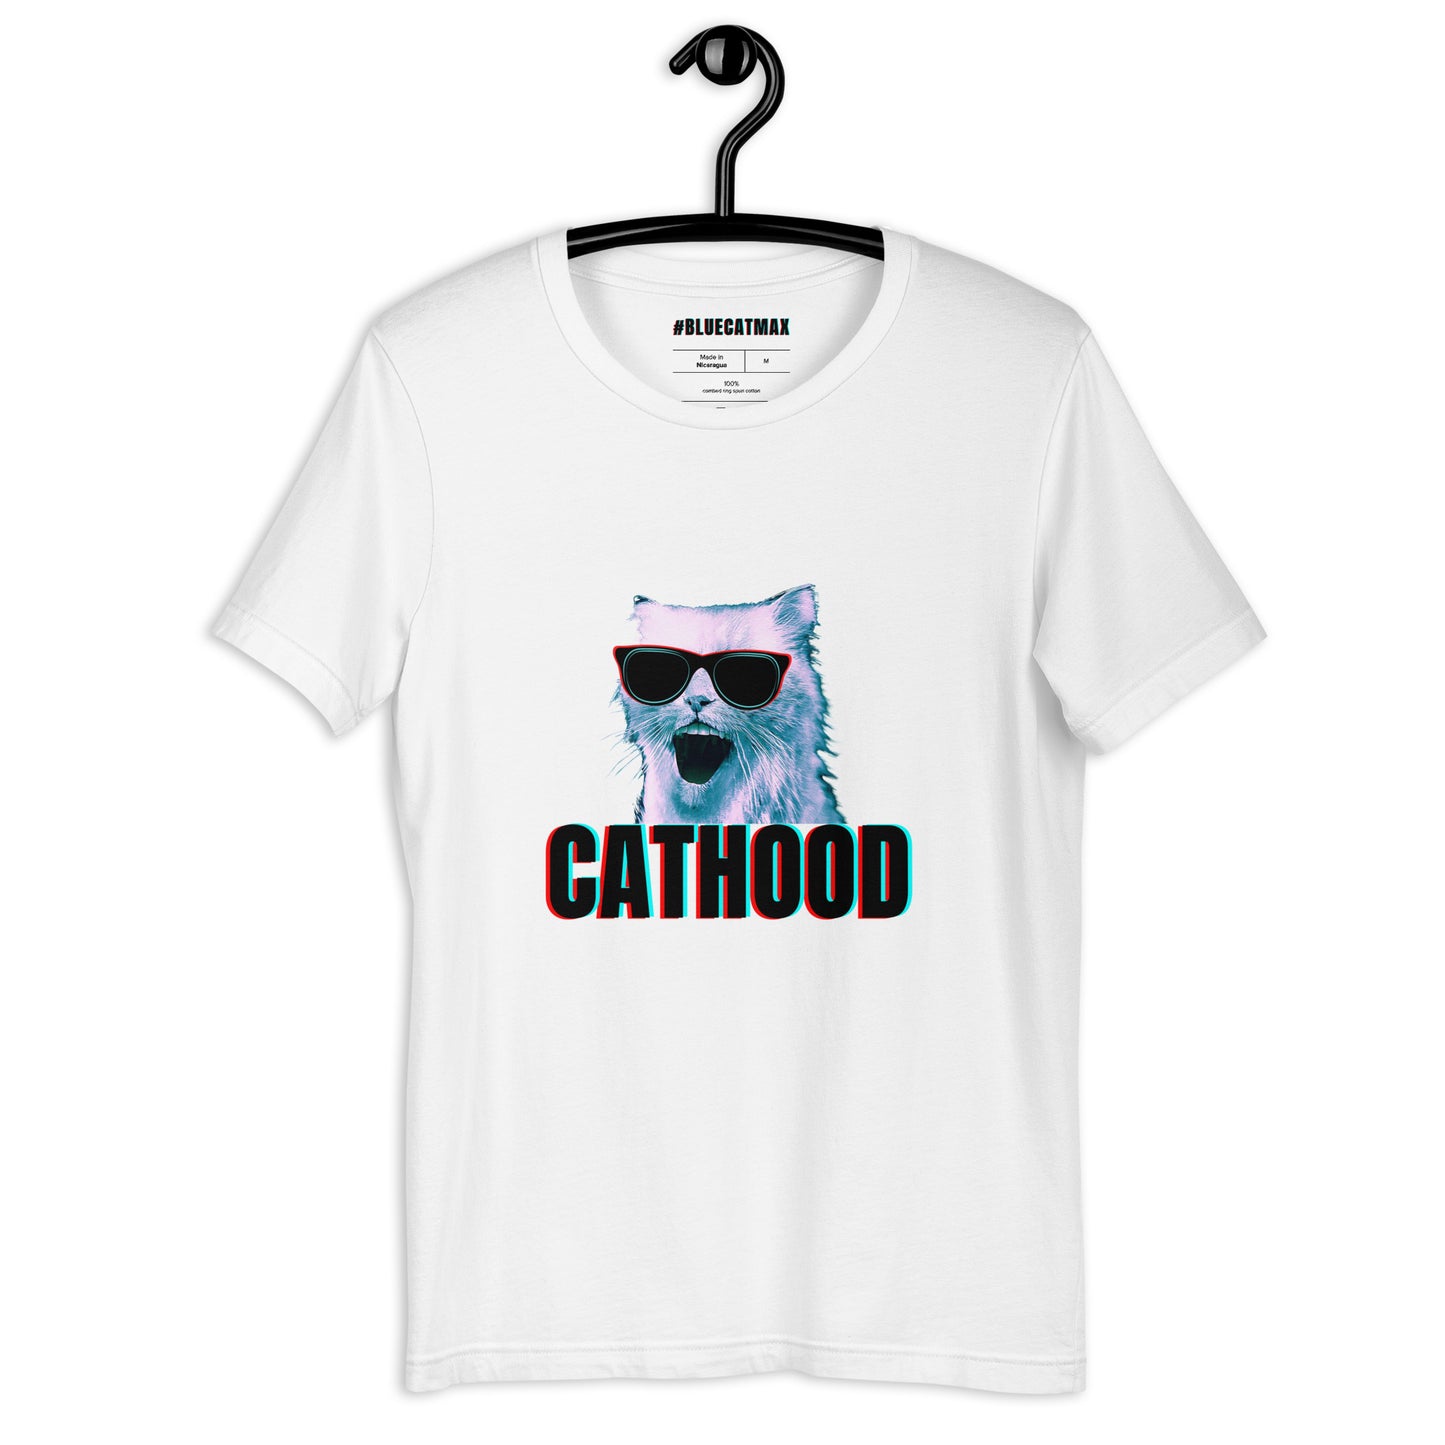 CATHOOD NFT Short-Sleeve Unisex Plus Size T-Shirt XS-5XL